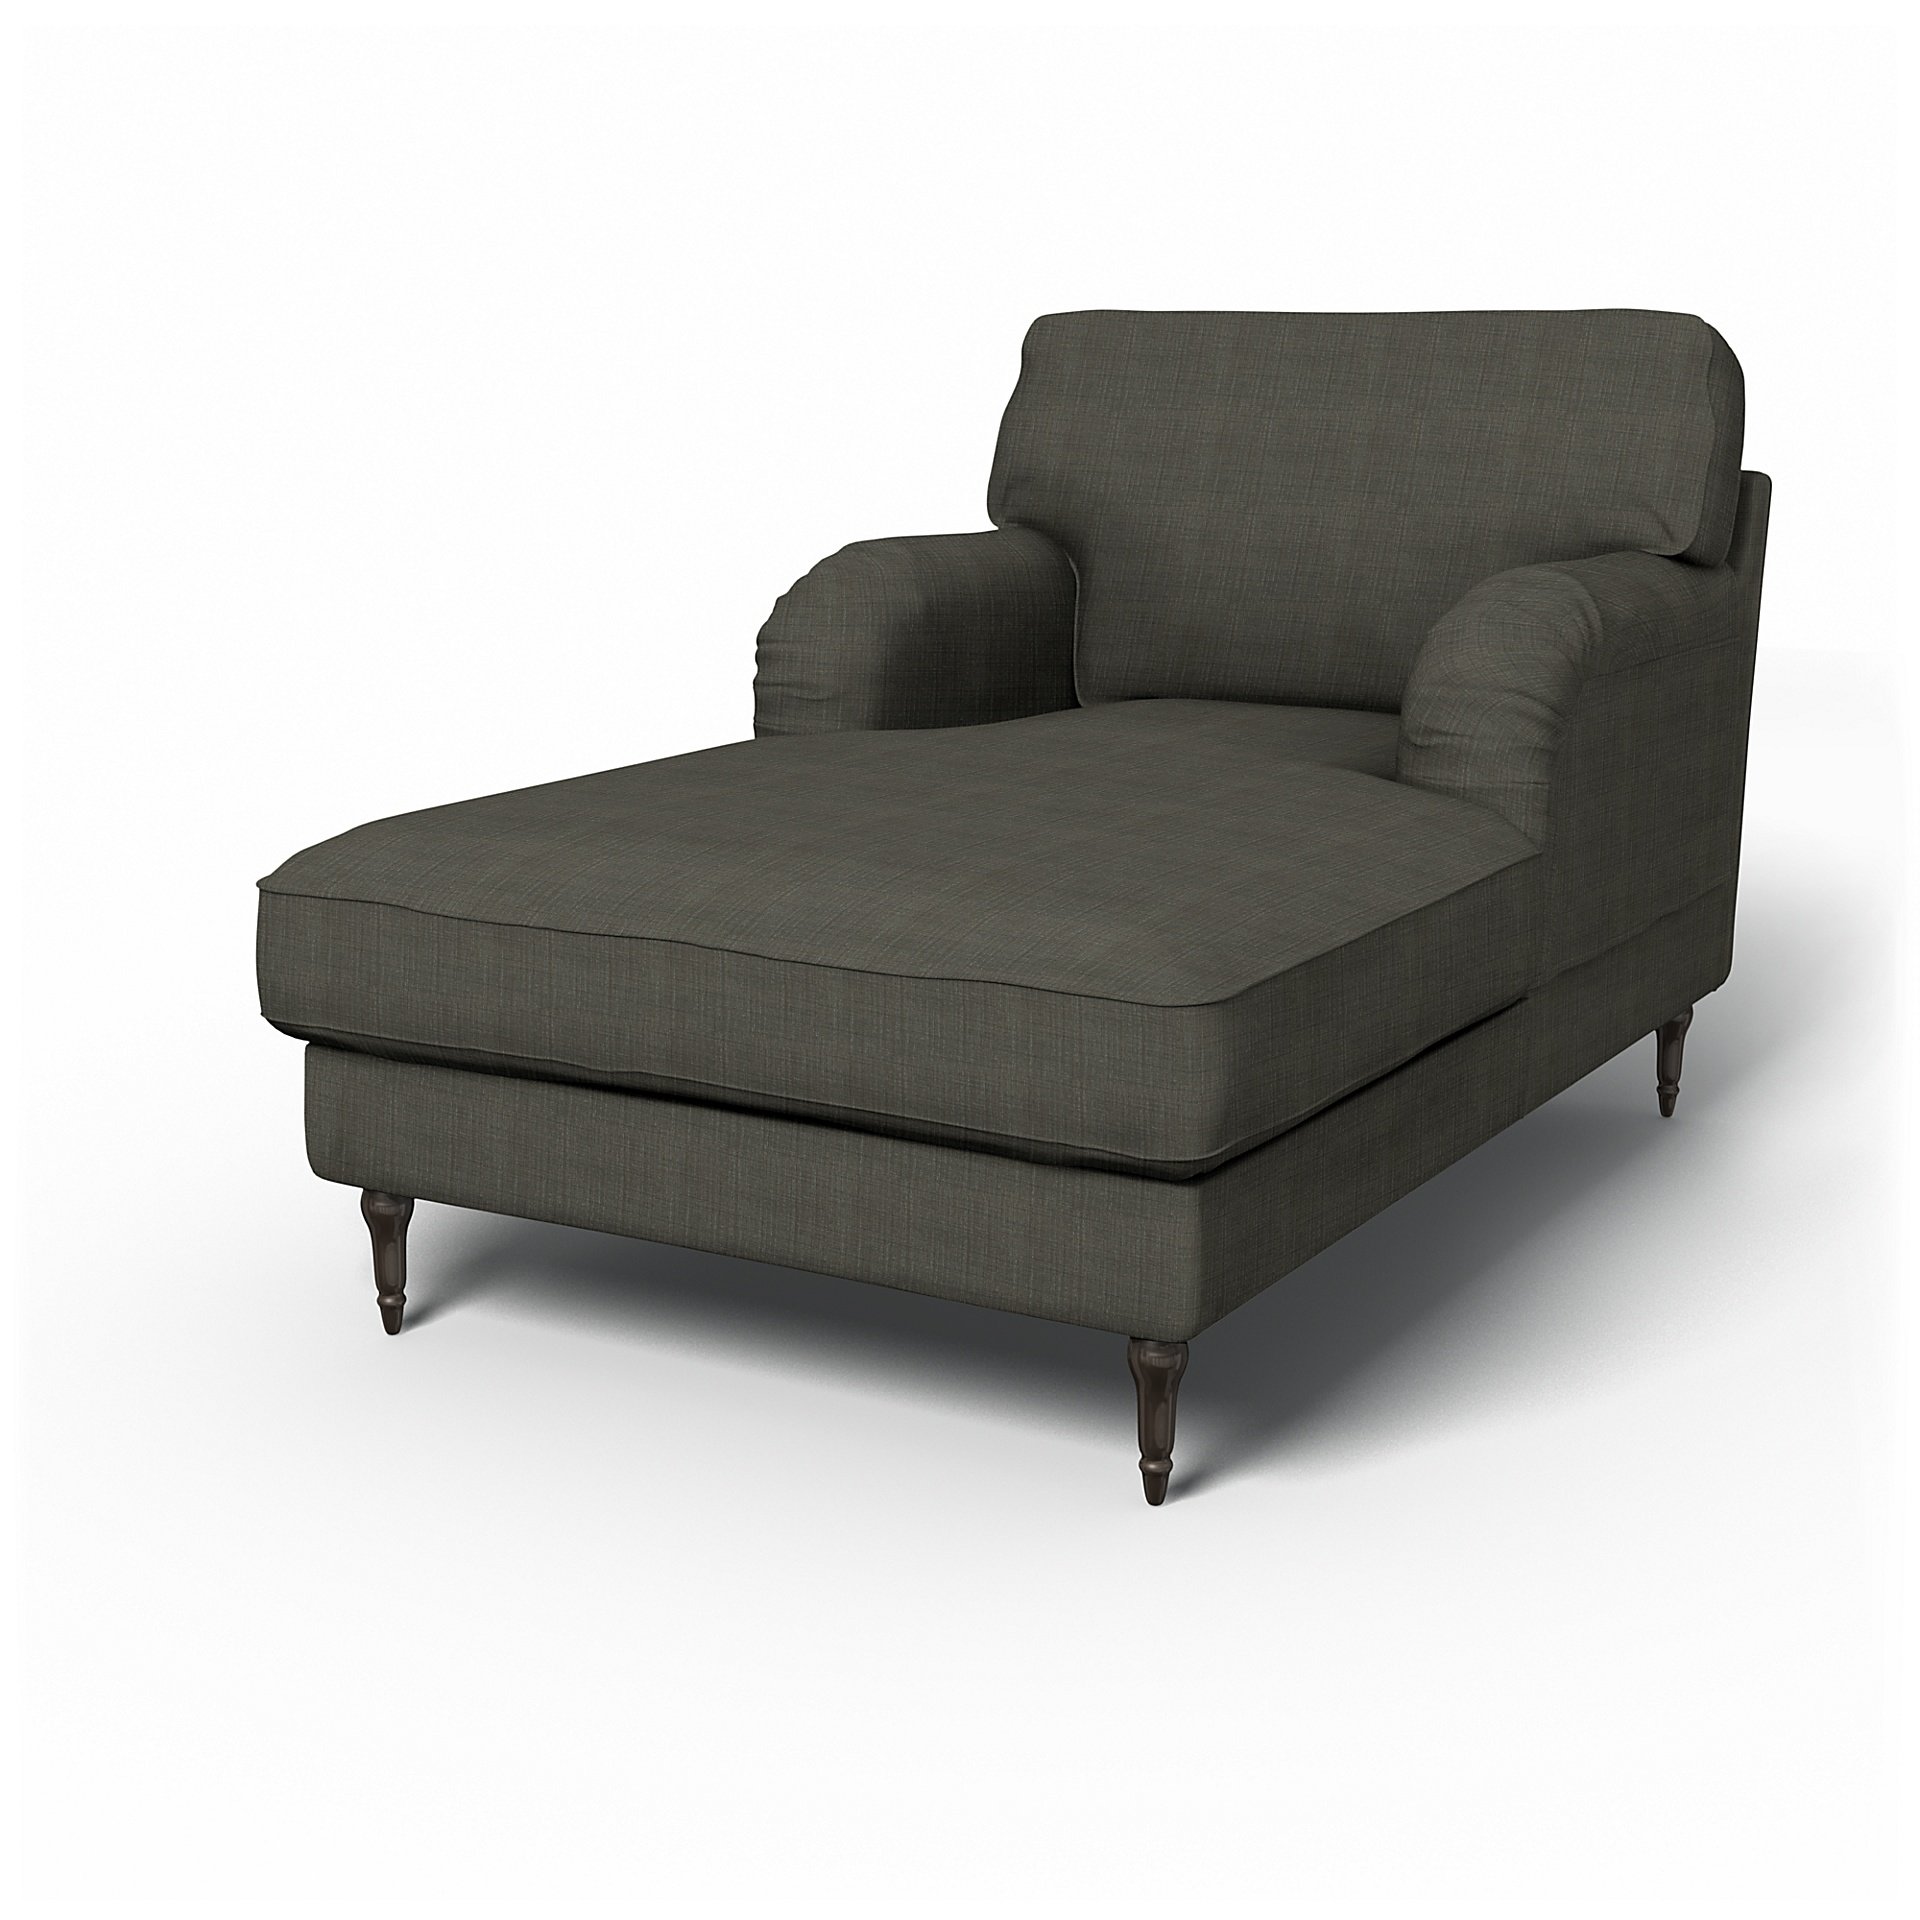 IKEA - Stocksund Chaise Longue Cover, Mole Brown, Boucle & Texture - Bemz